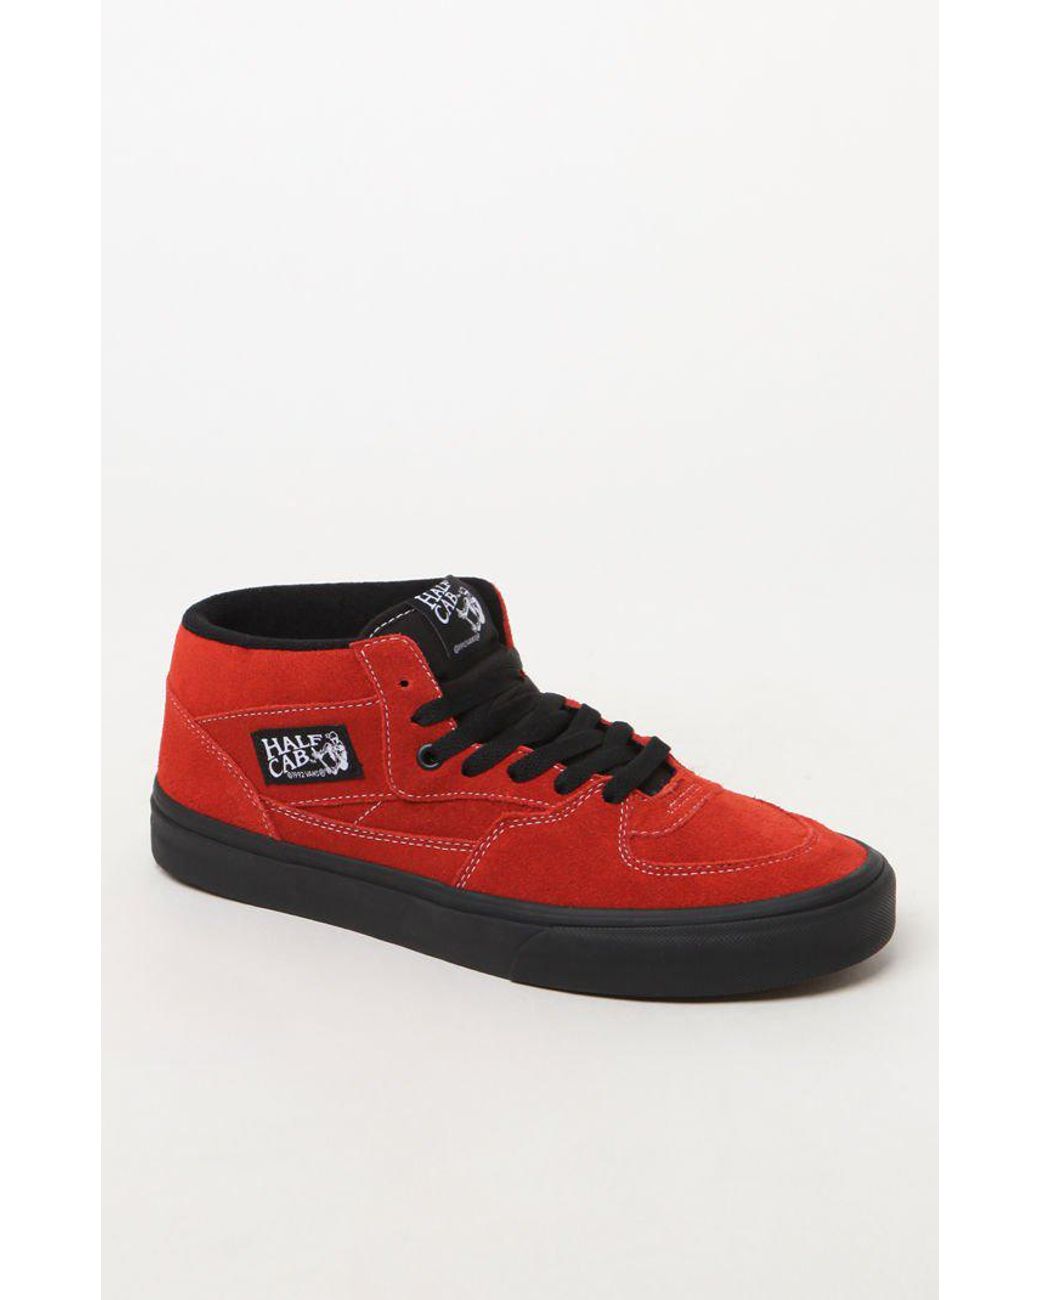 Vans Rubber Half Cab Black Sole Red Shoes for Men | Lyst